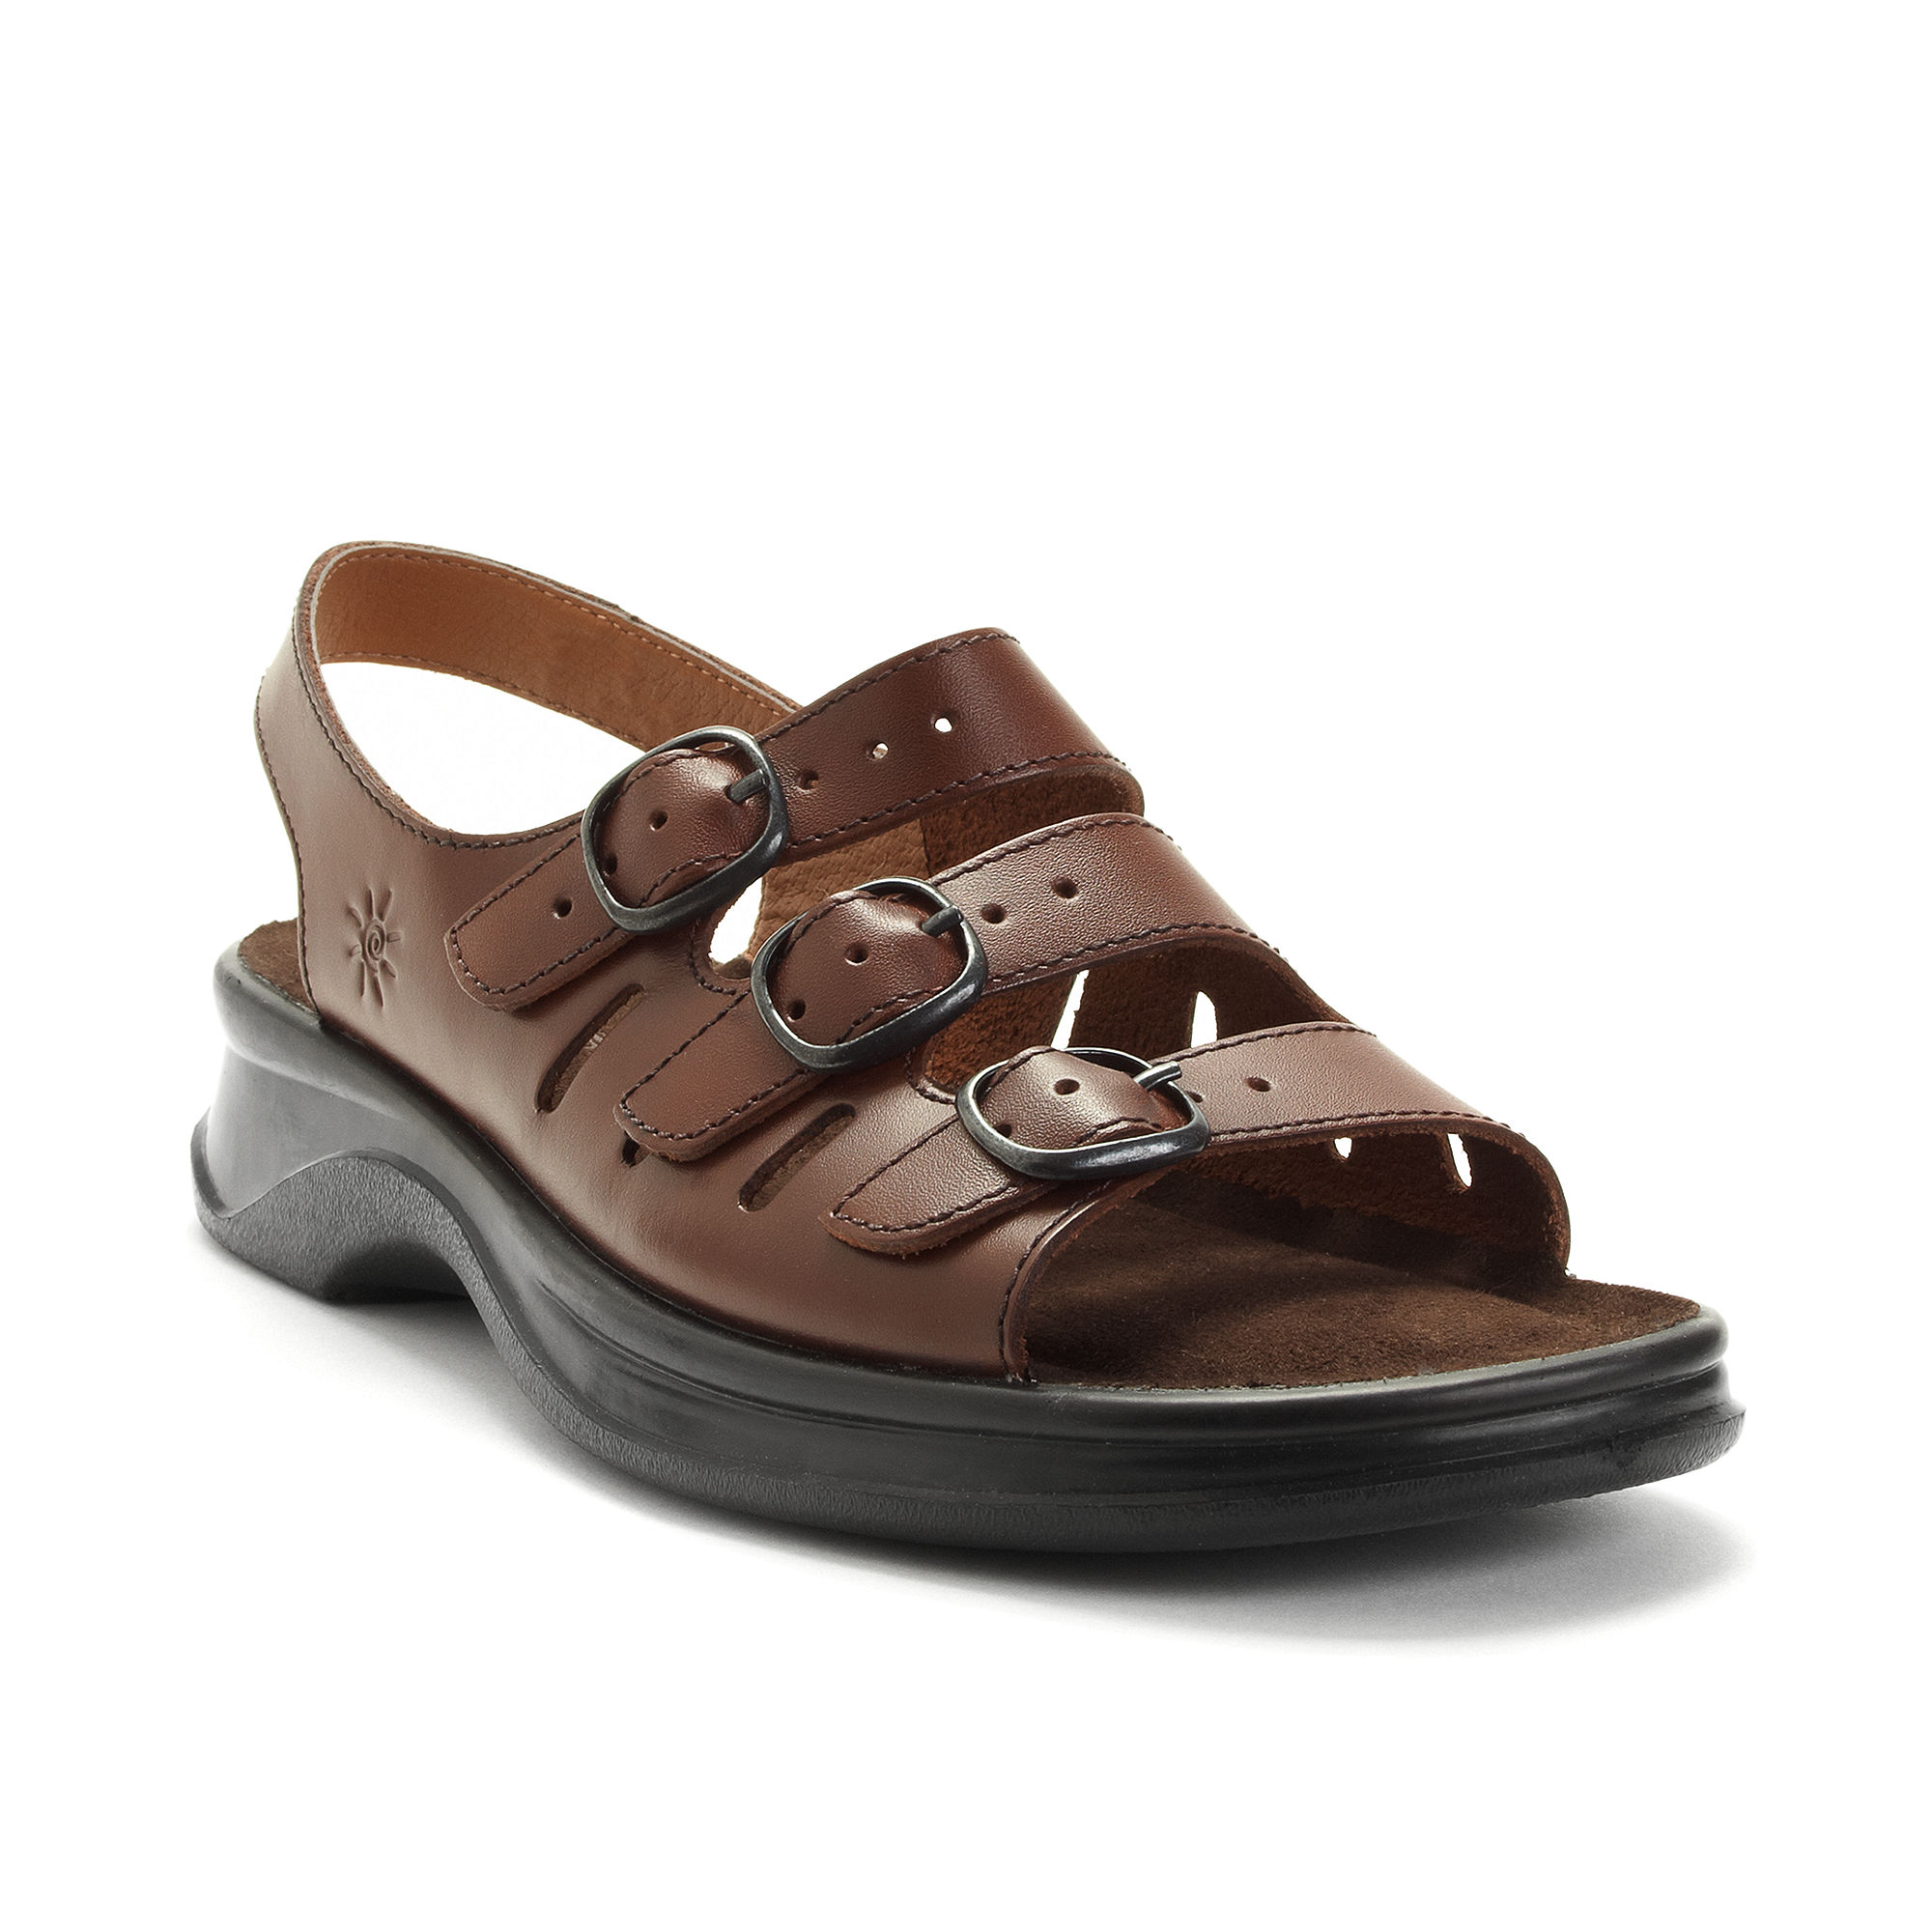 Clarks Sunbeat Sandals Sale, 53% OFF | www.colegiogamarra.com